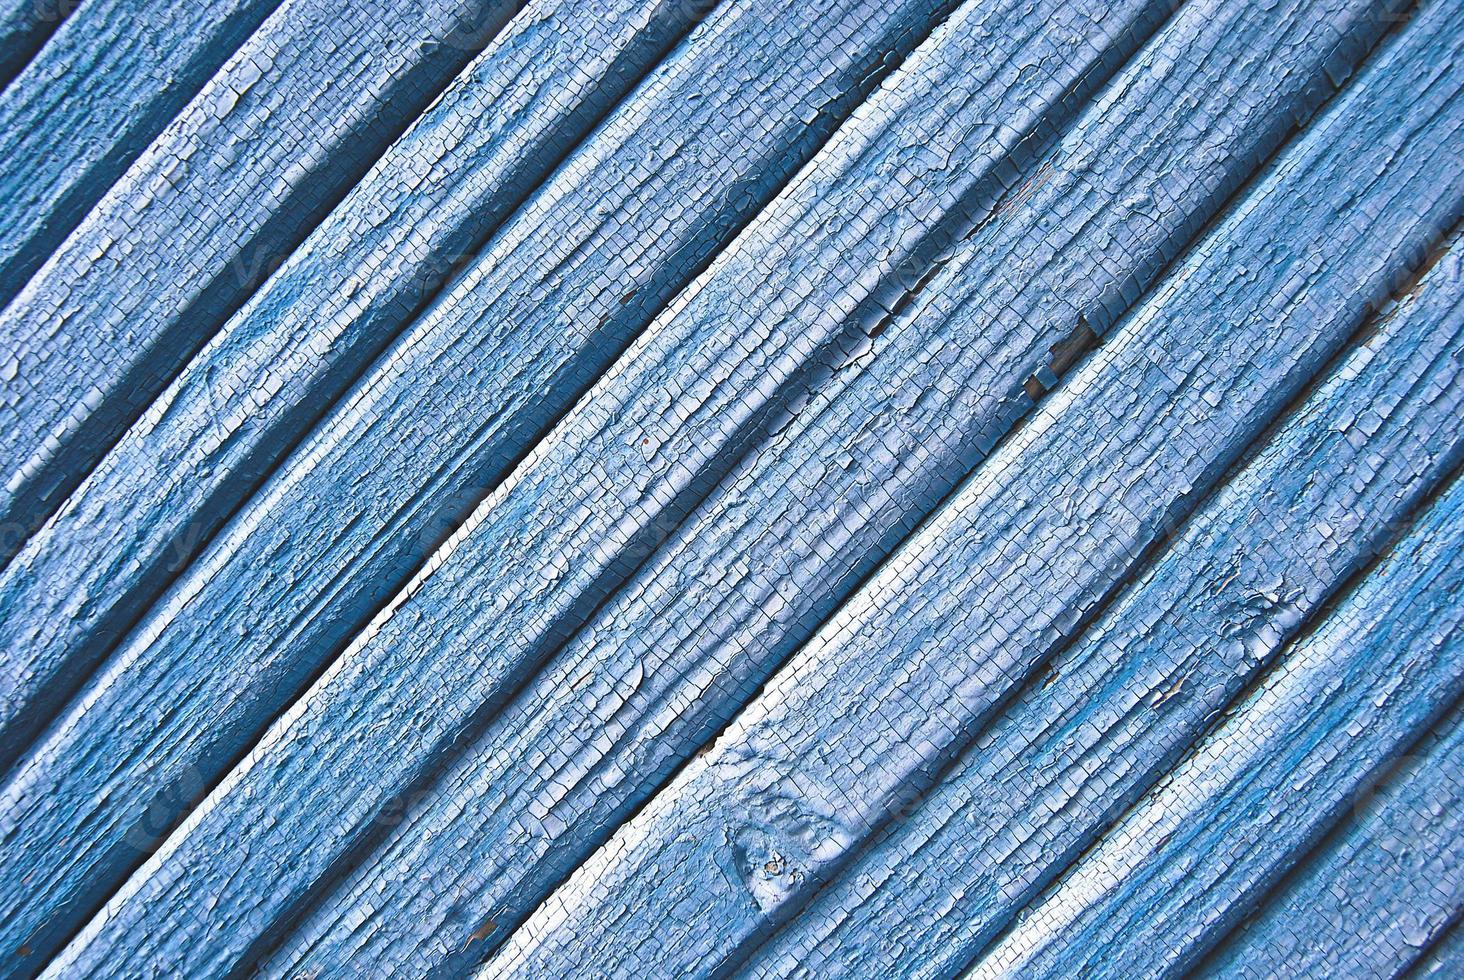 Wooden slats background with cracked blue paint, diagonally arranged photo